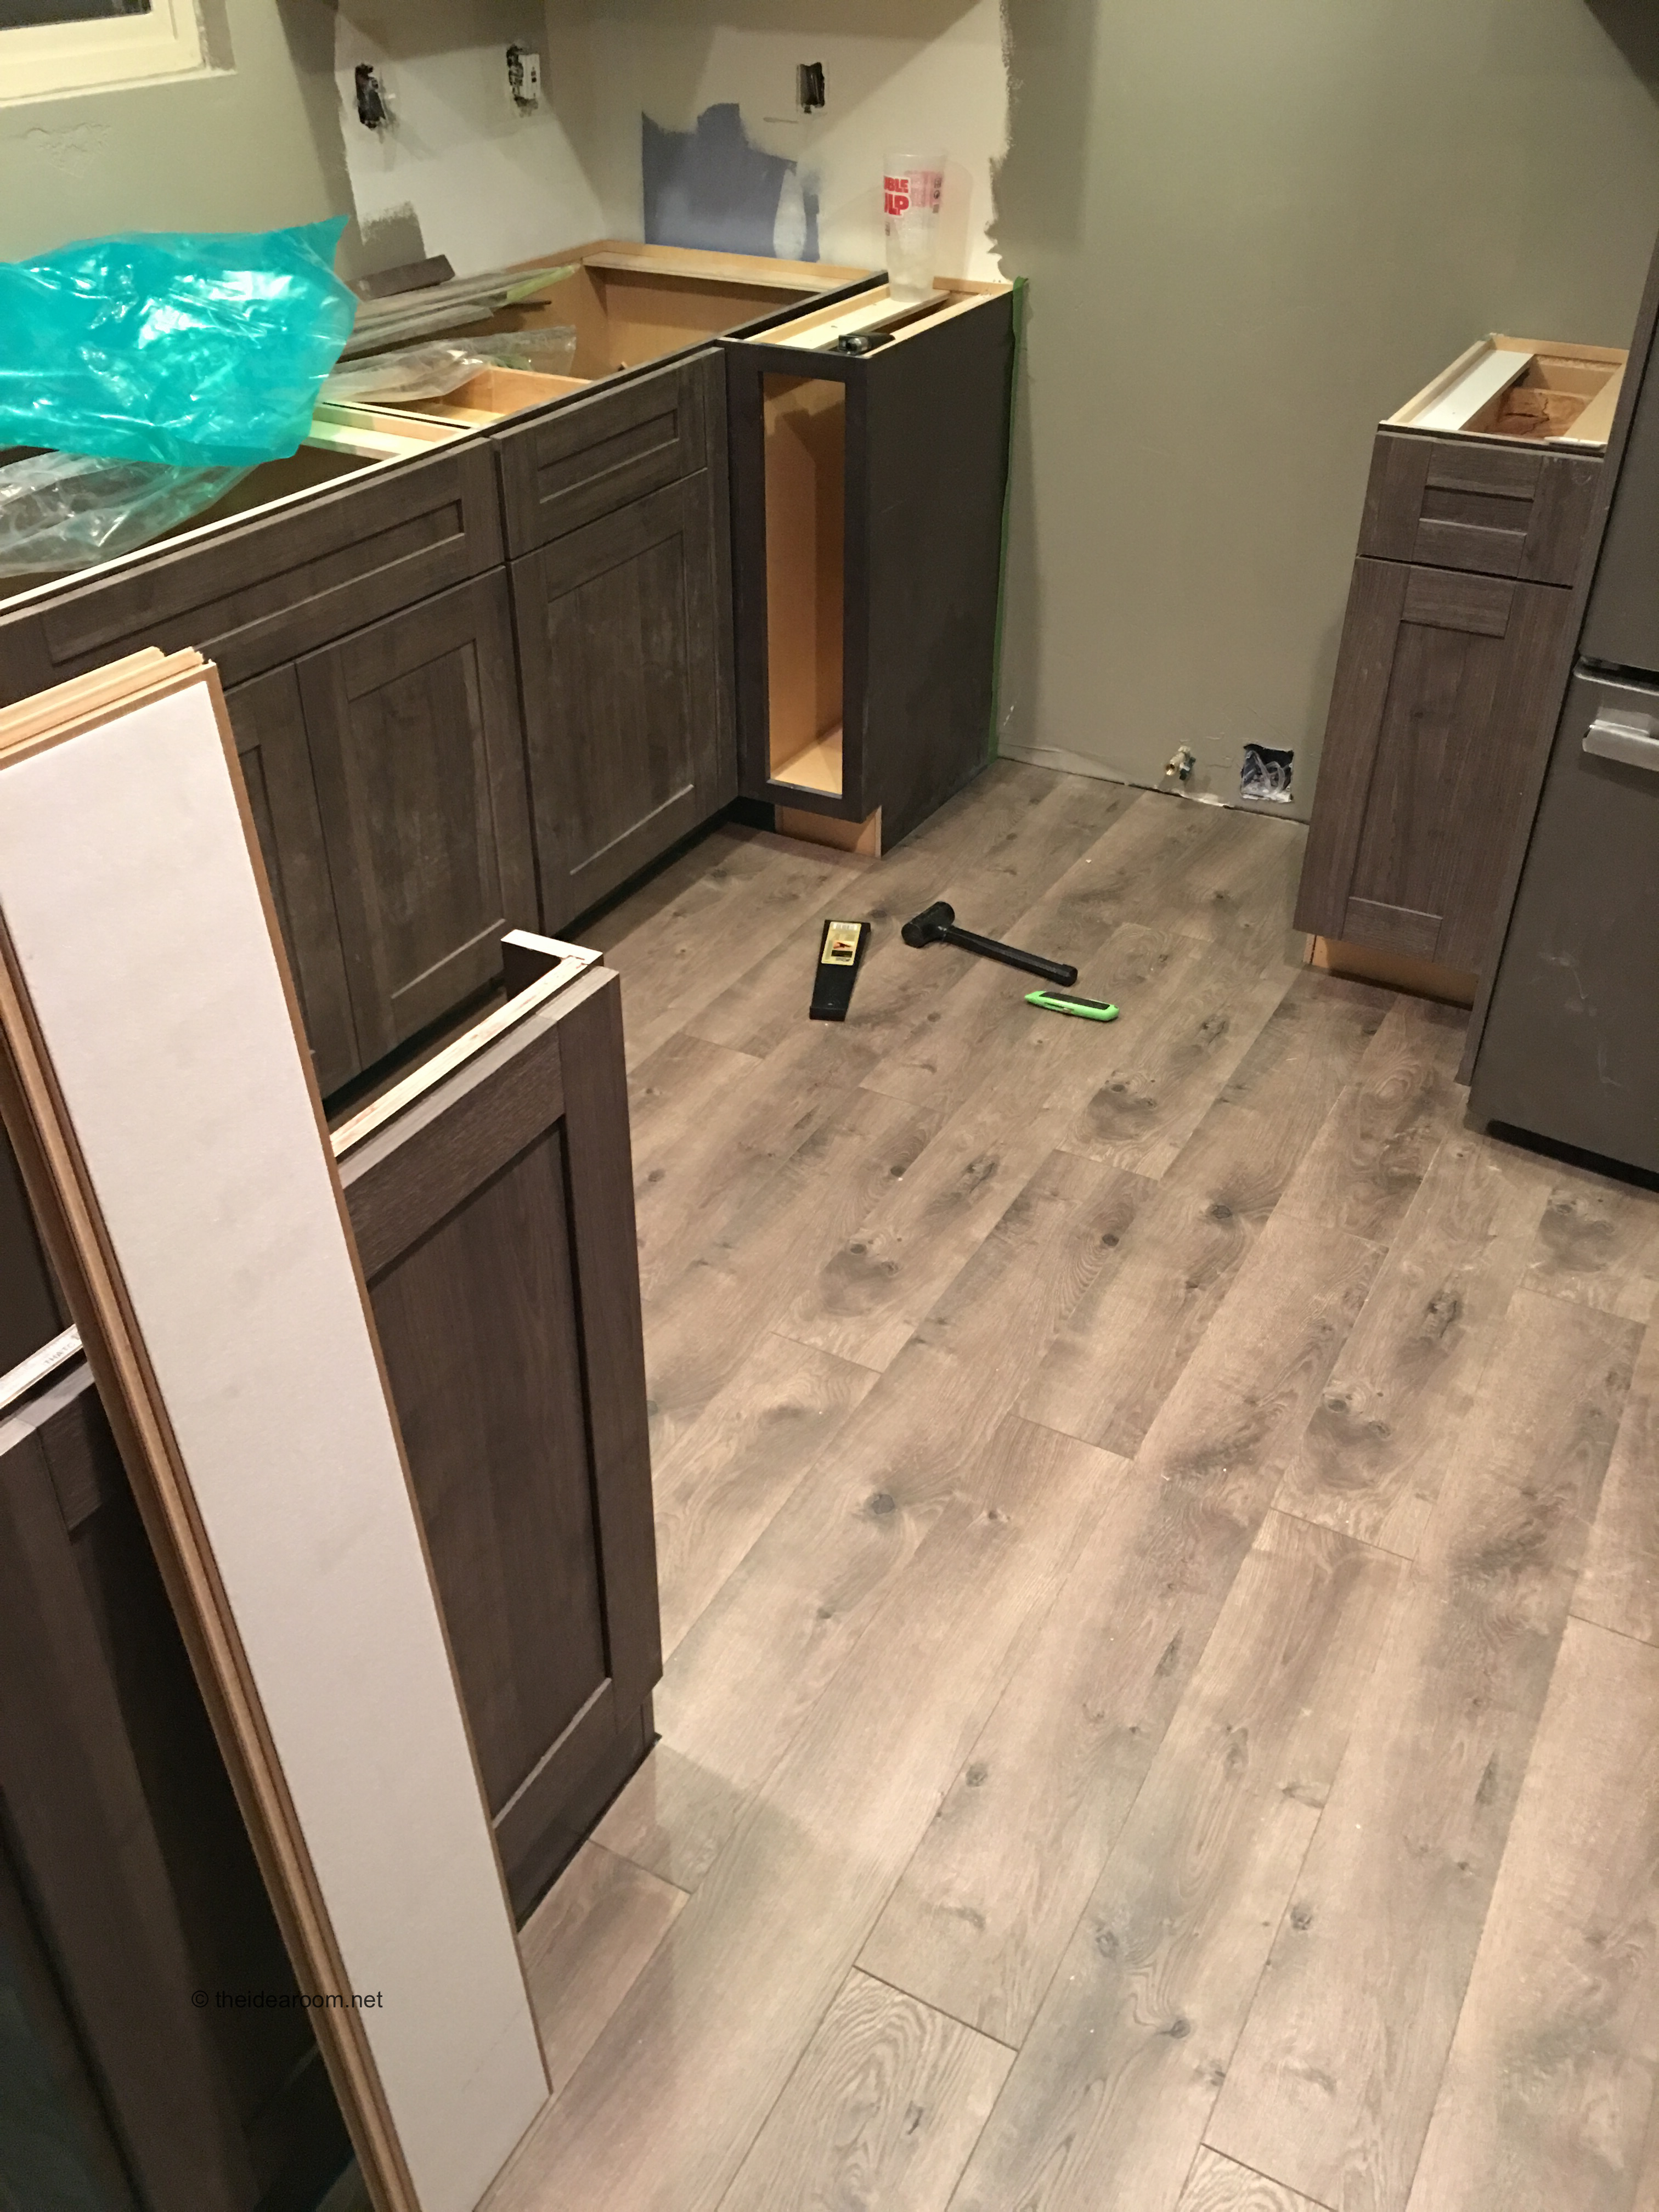 To Install Laminate Flooring, Installing Laminate Flooring In Kitchen